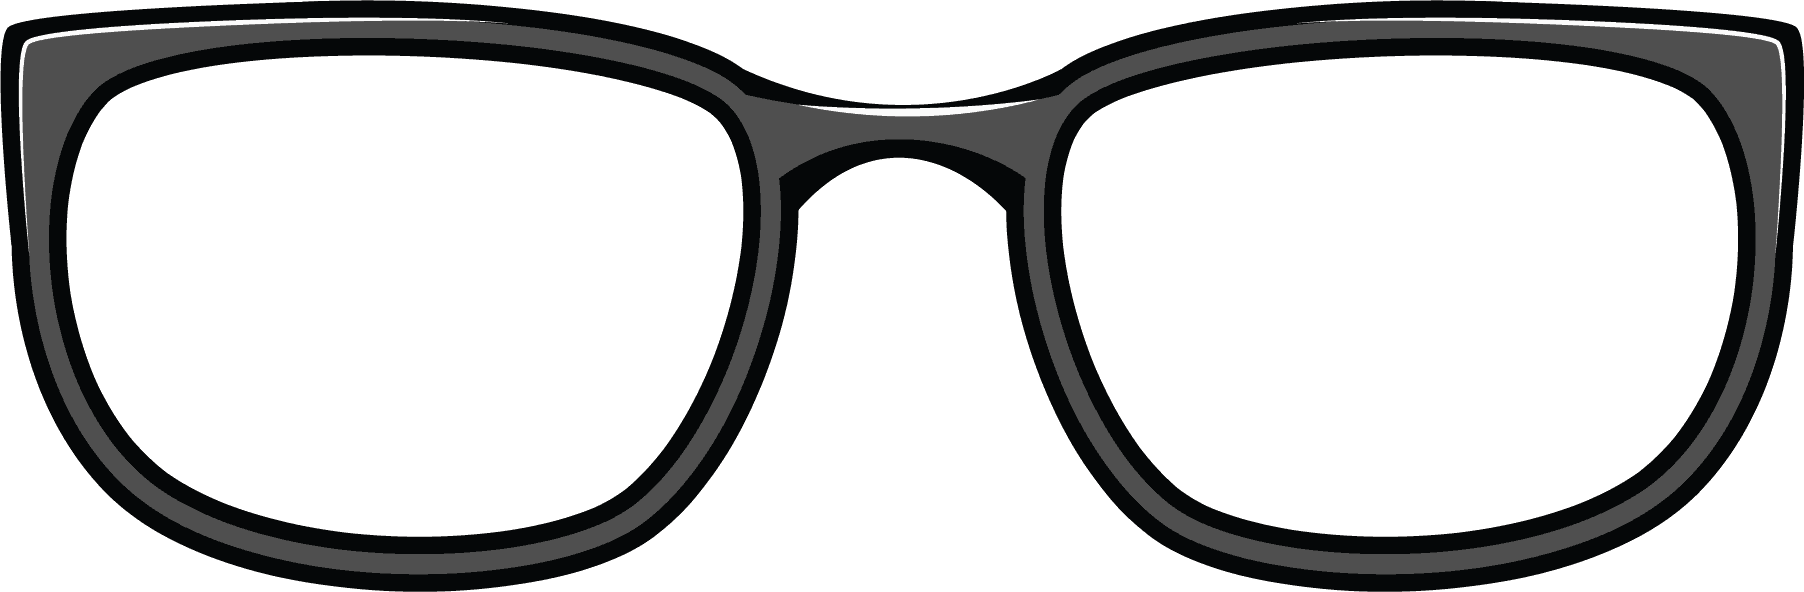 Hipster glasses clipart